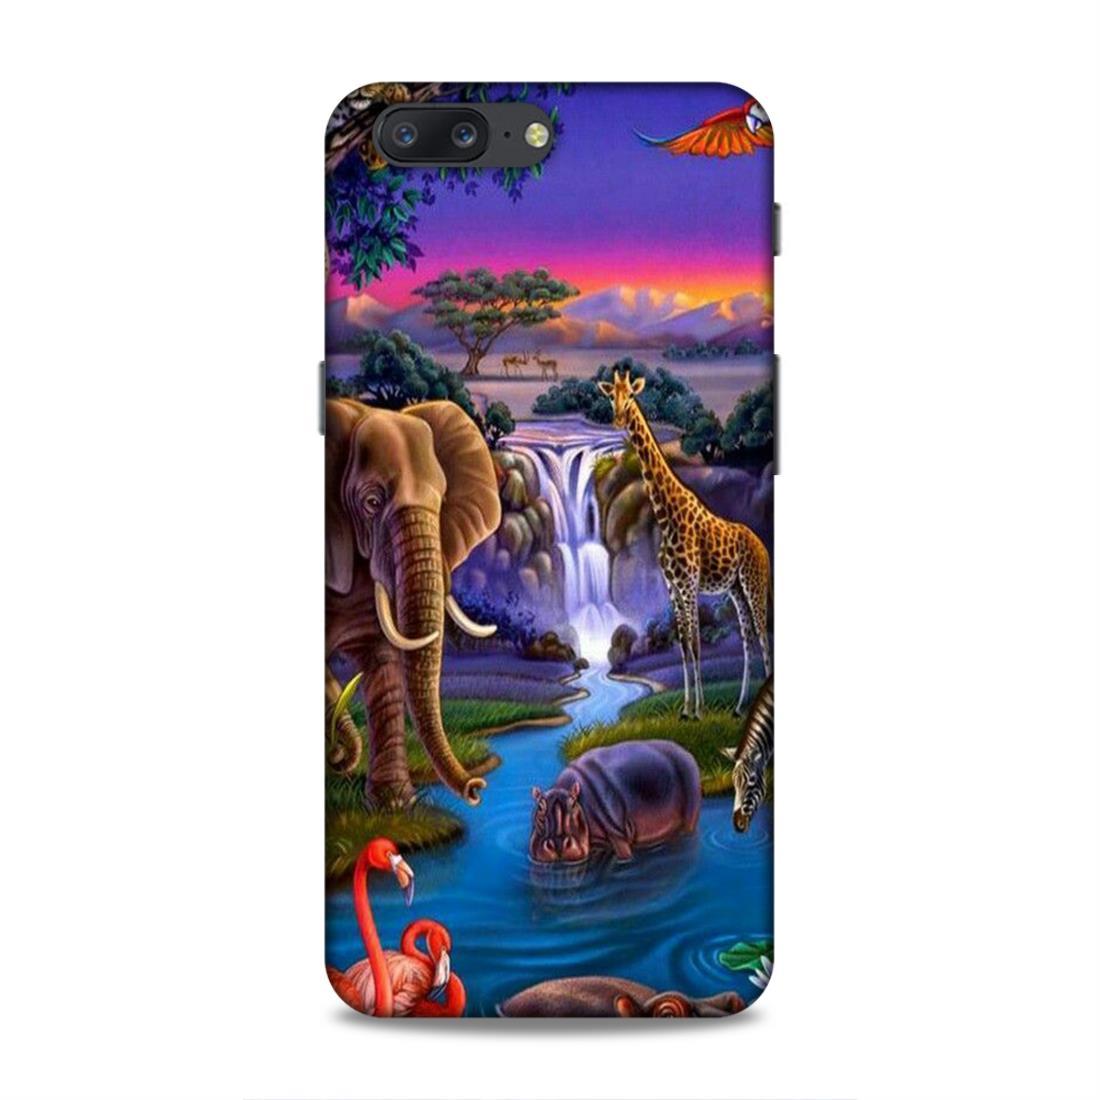 Jungle Art OnePlus 5 Mobile Cover